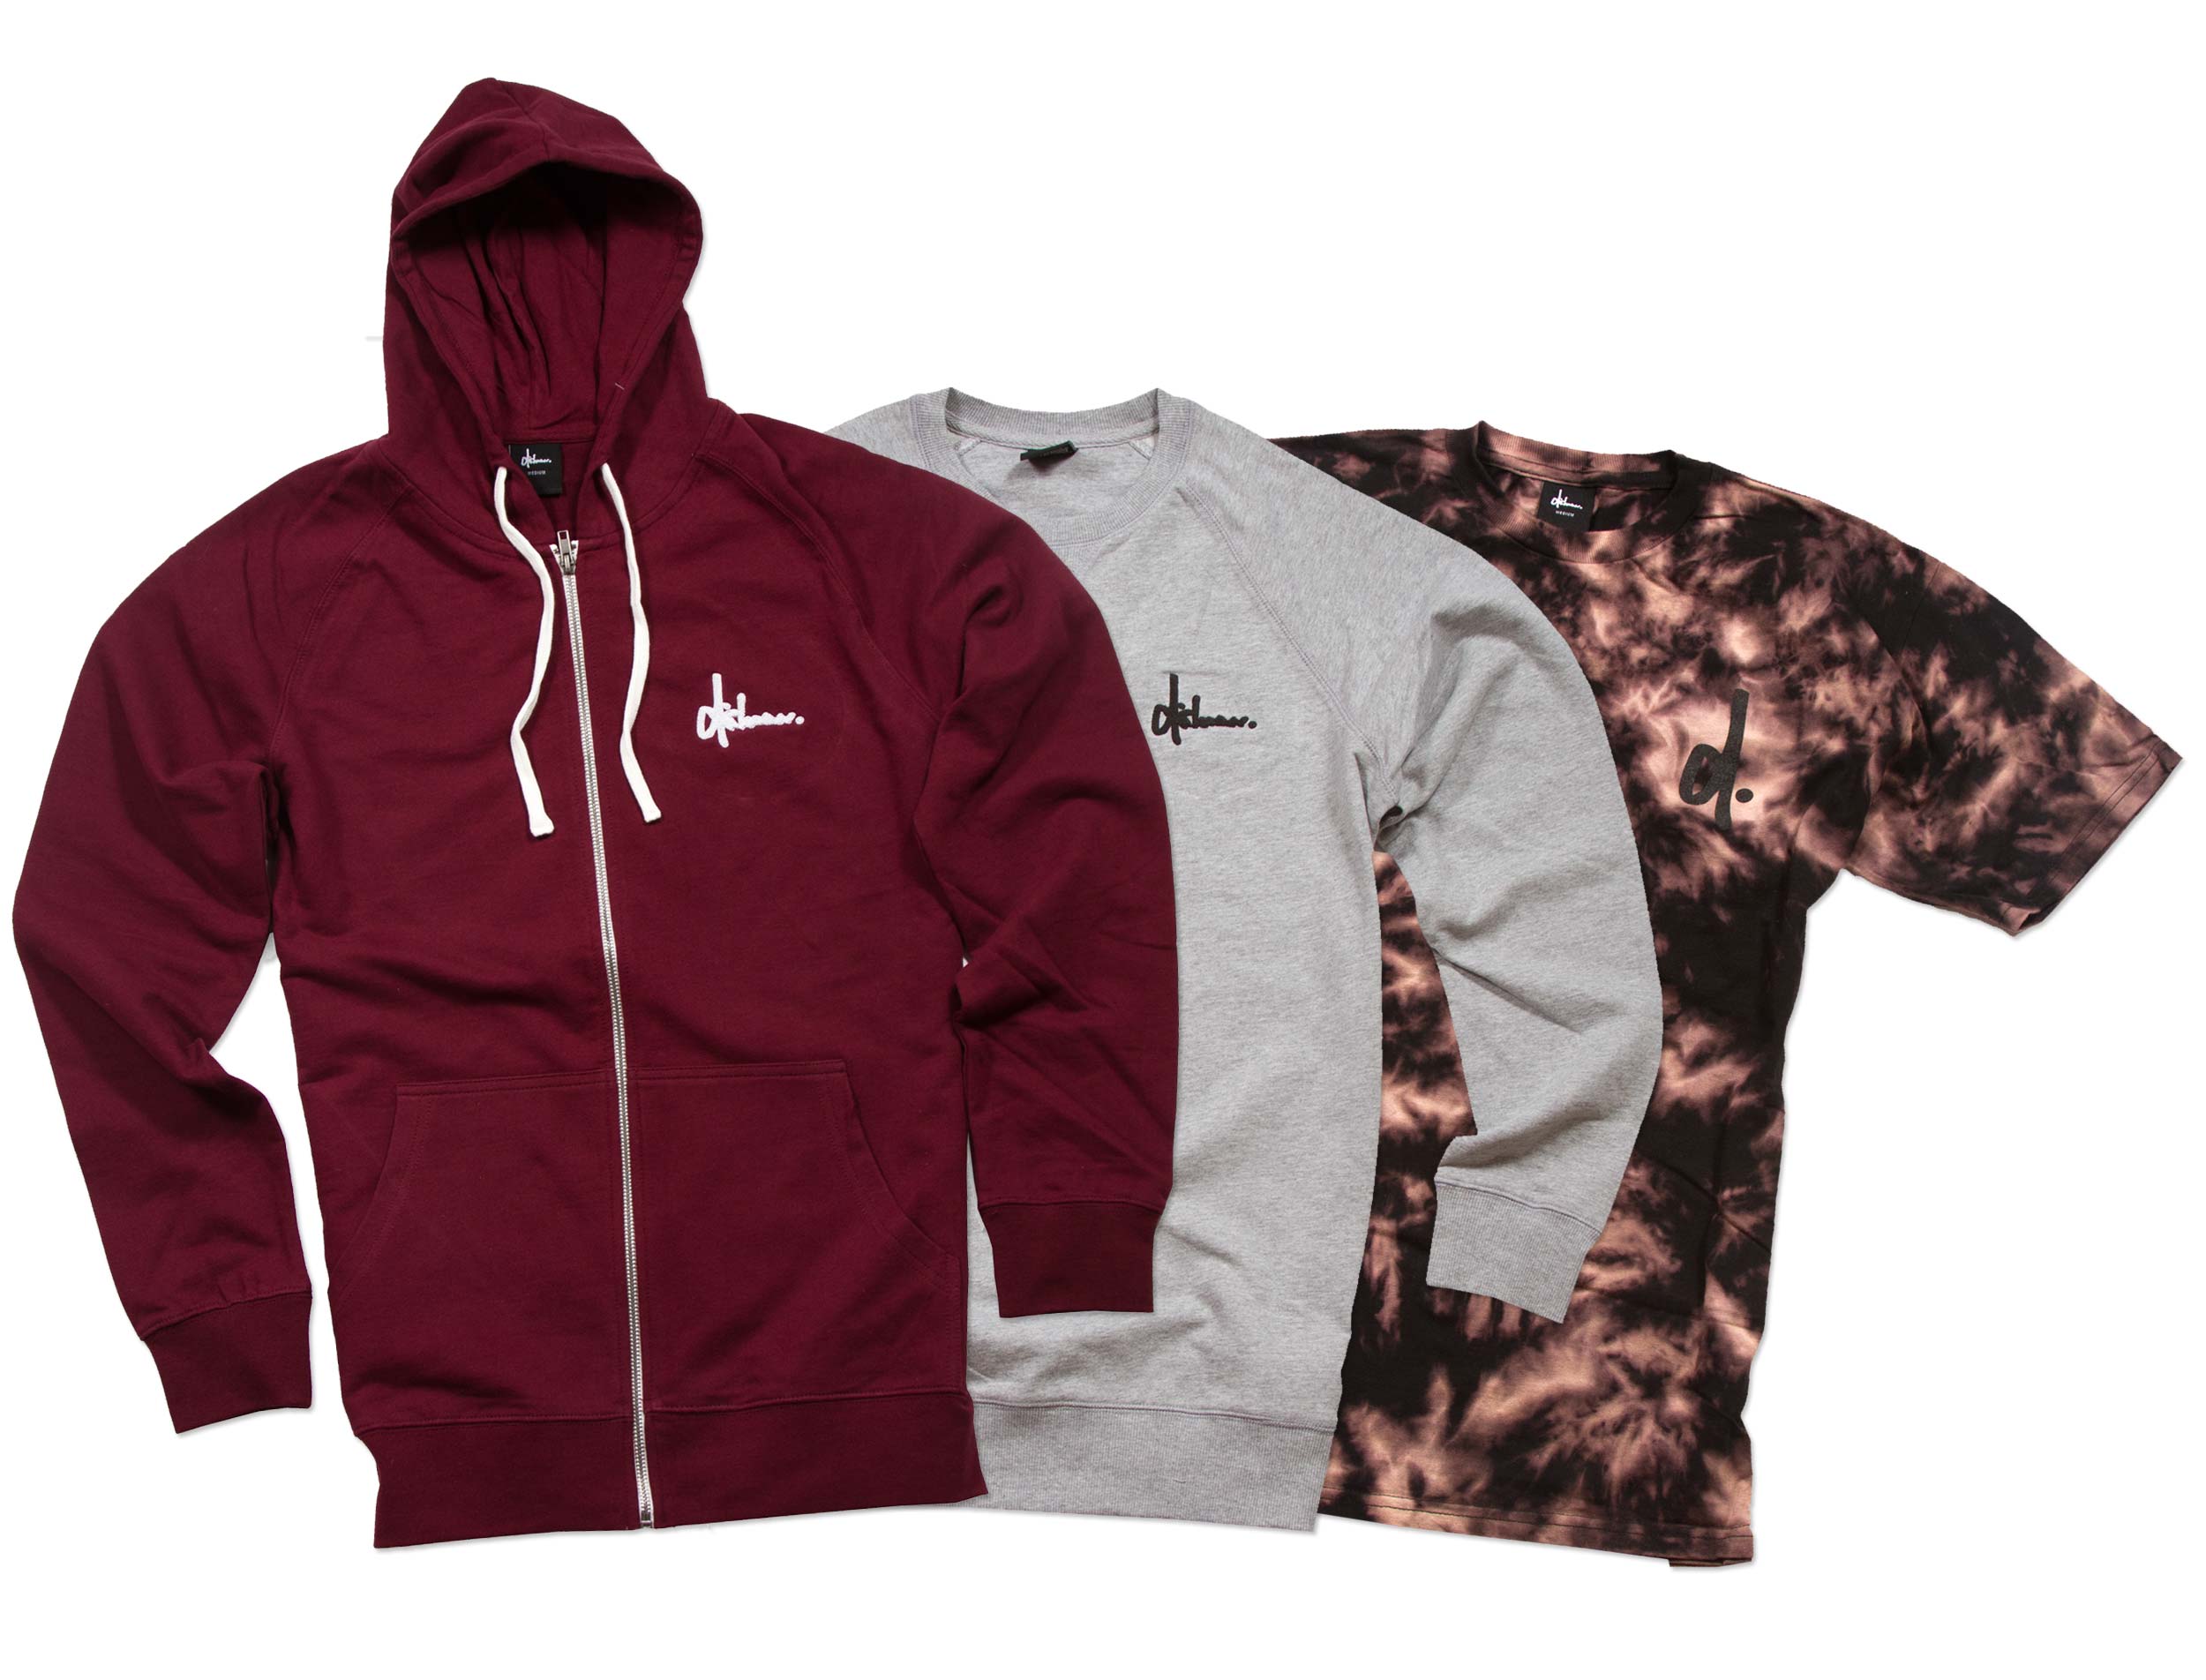 Dishonour Brand - Spring 2014 Drop Out Now! Crewnecks, Zipup hoodies and Acid T-shirts